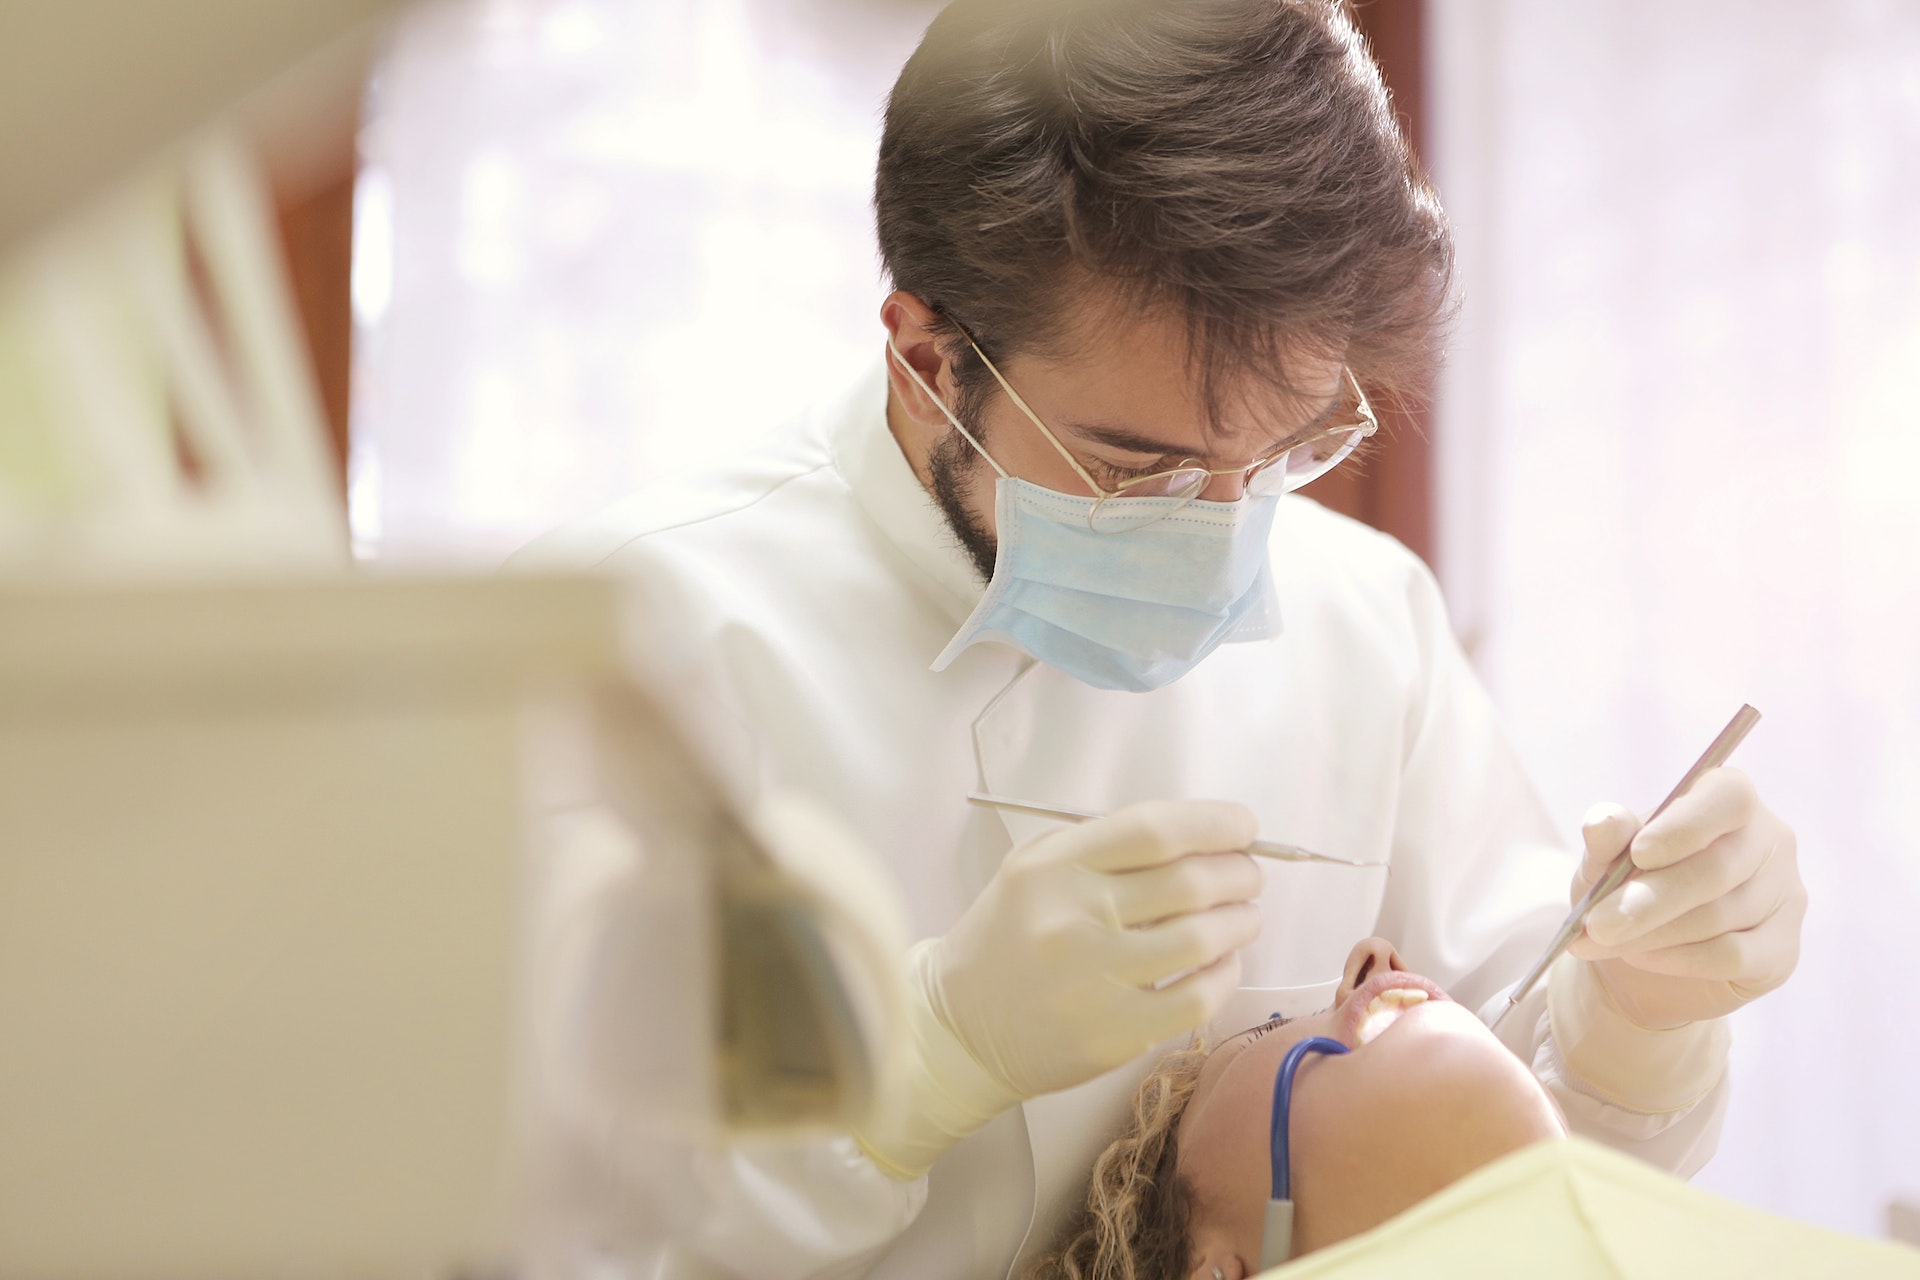 Dentist examining a patient’s teeth